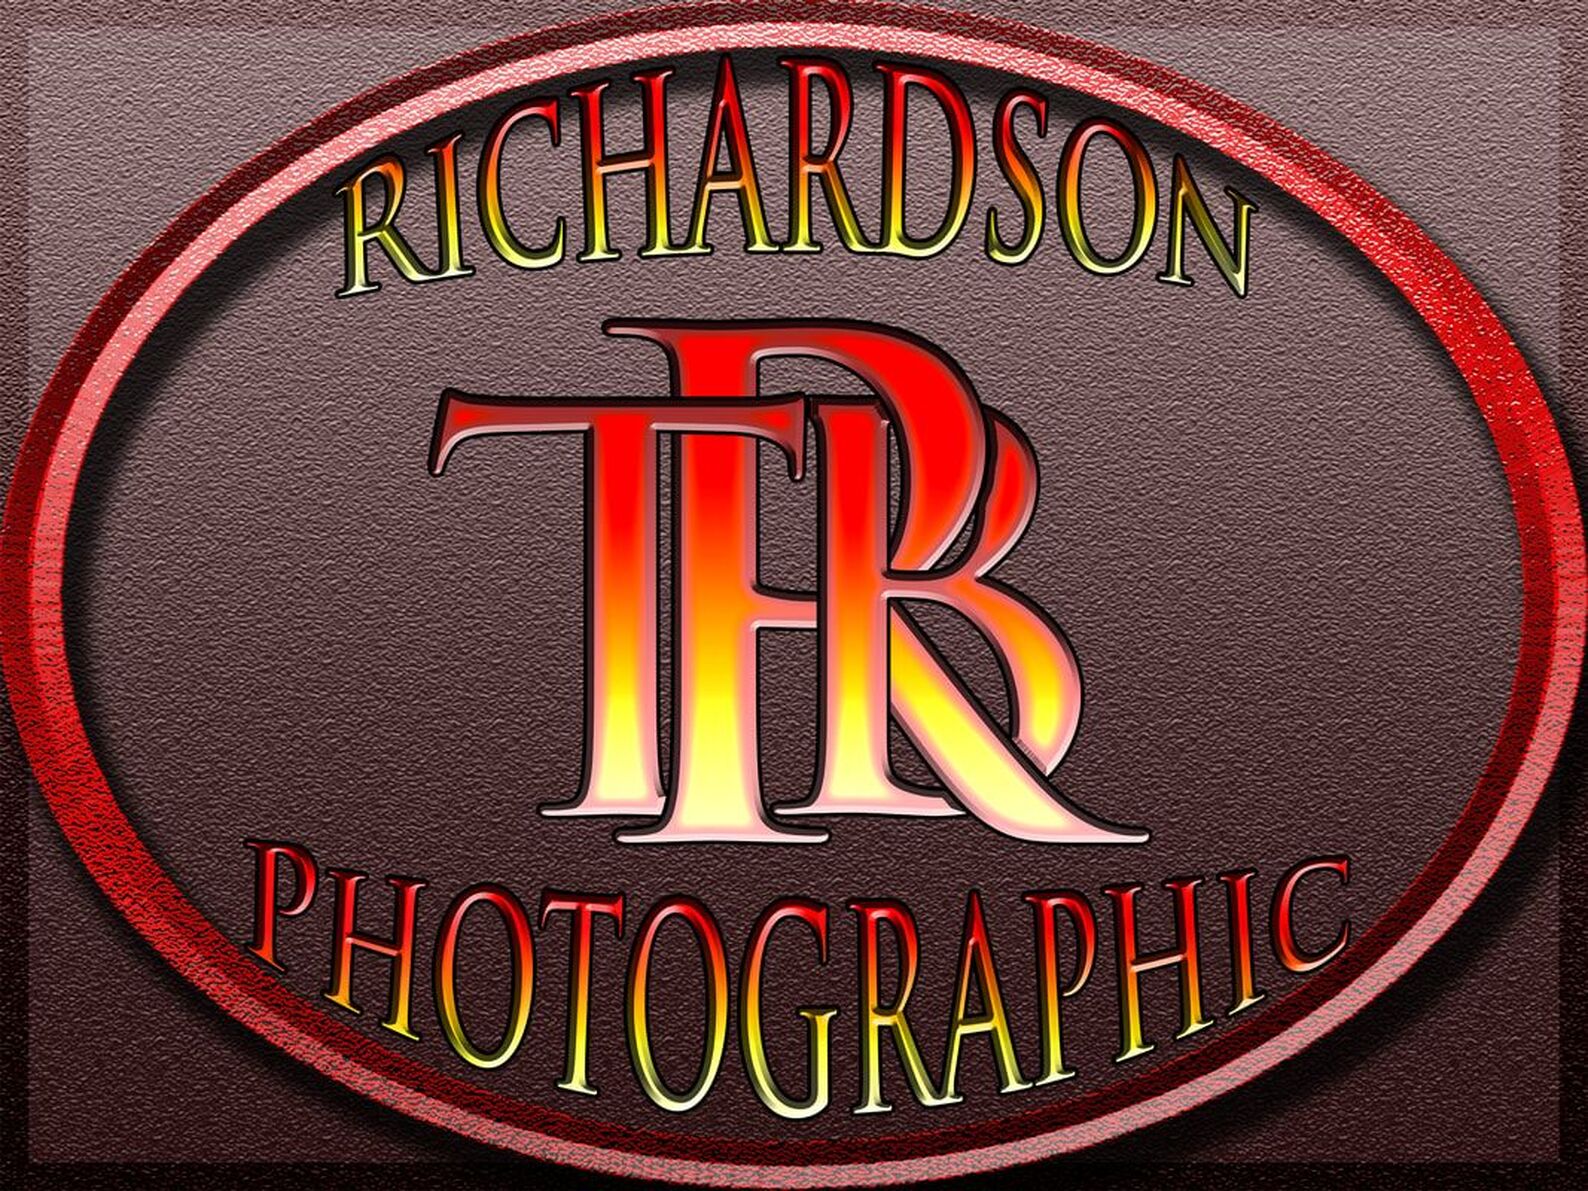 Richardson Photographic